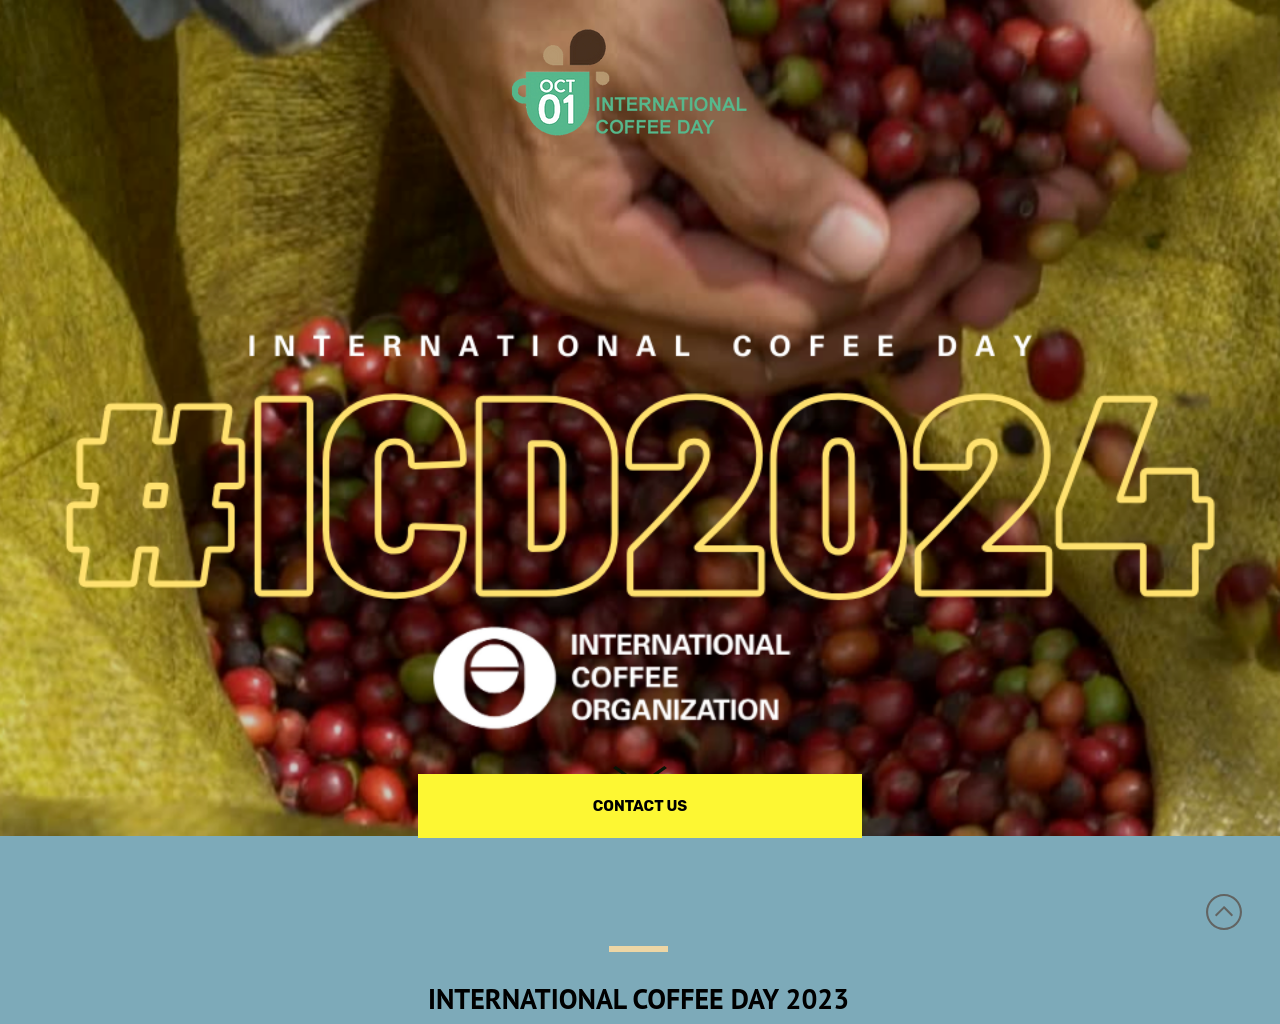 internationalcoffeeday.org